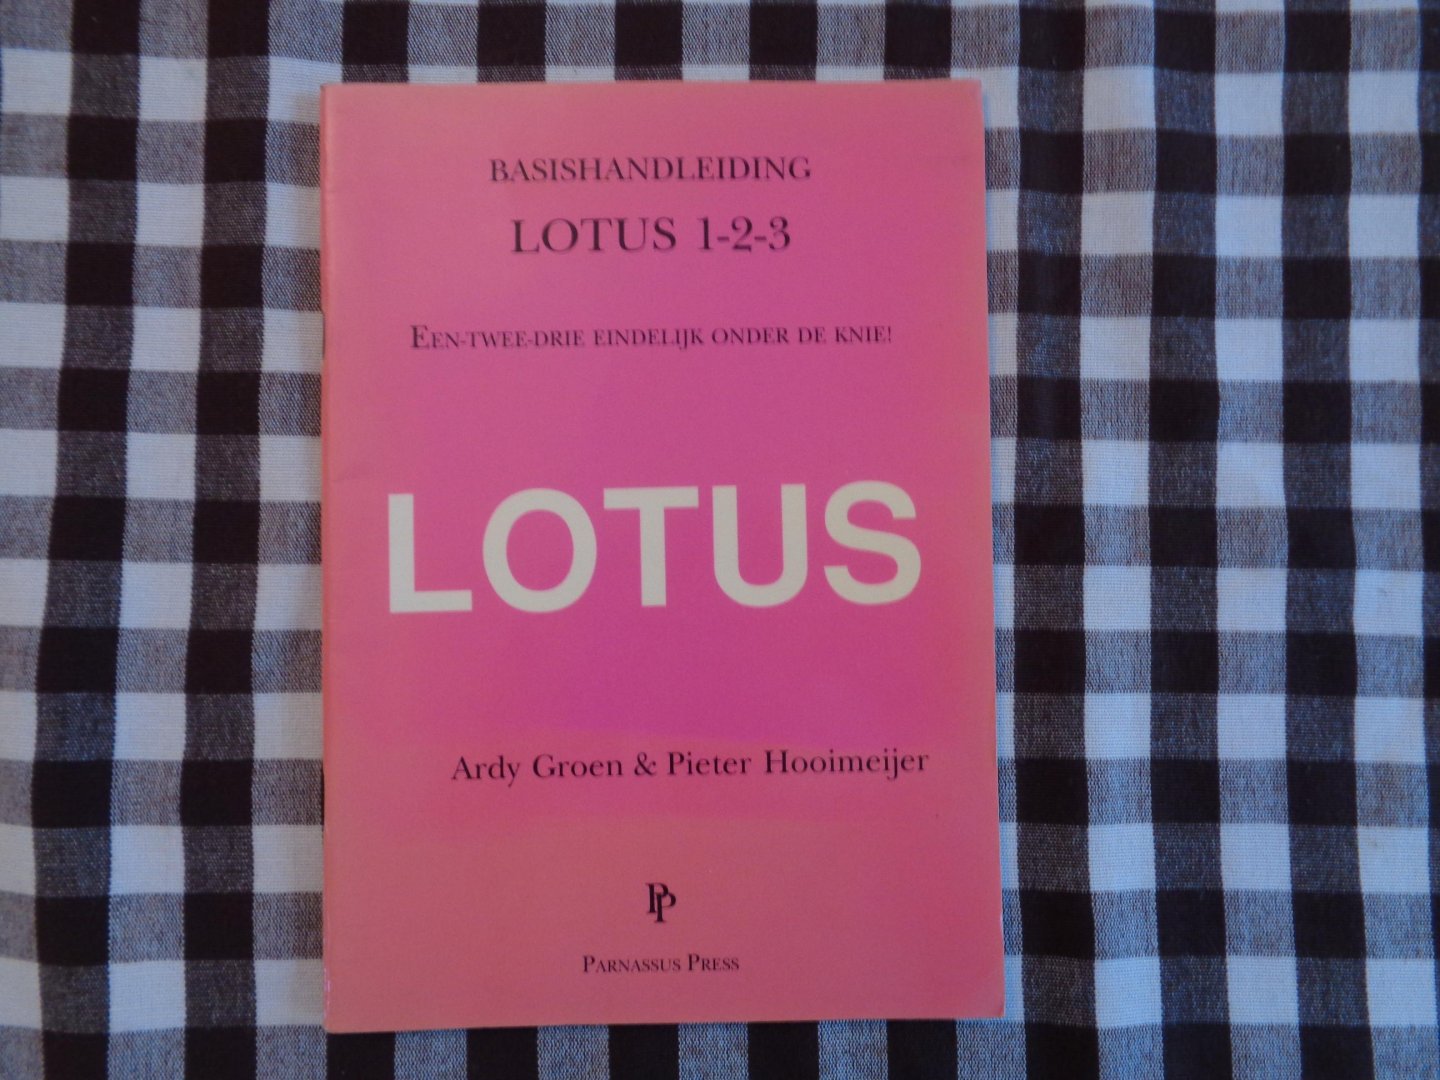 Groen - Basishandleiding lotus 1-2-3 / druk 1